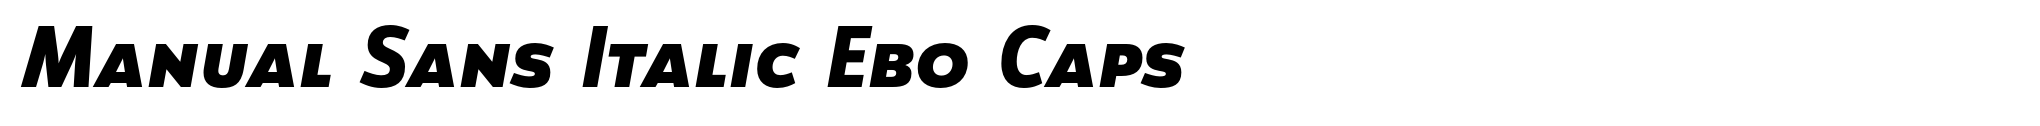 Manual Sans Italic Ebo Caps image